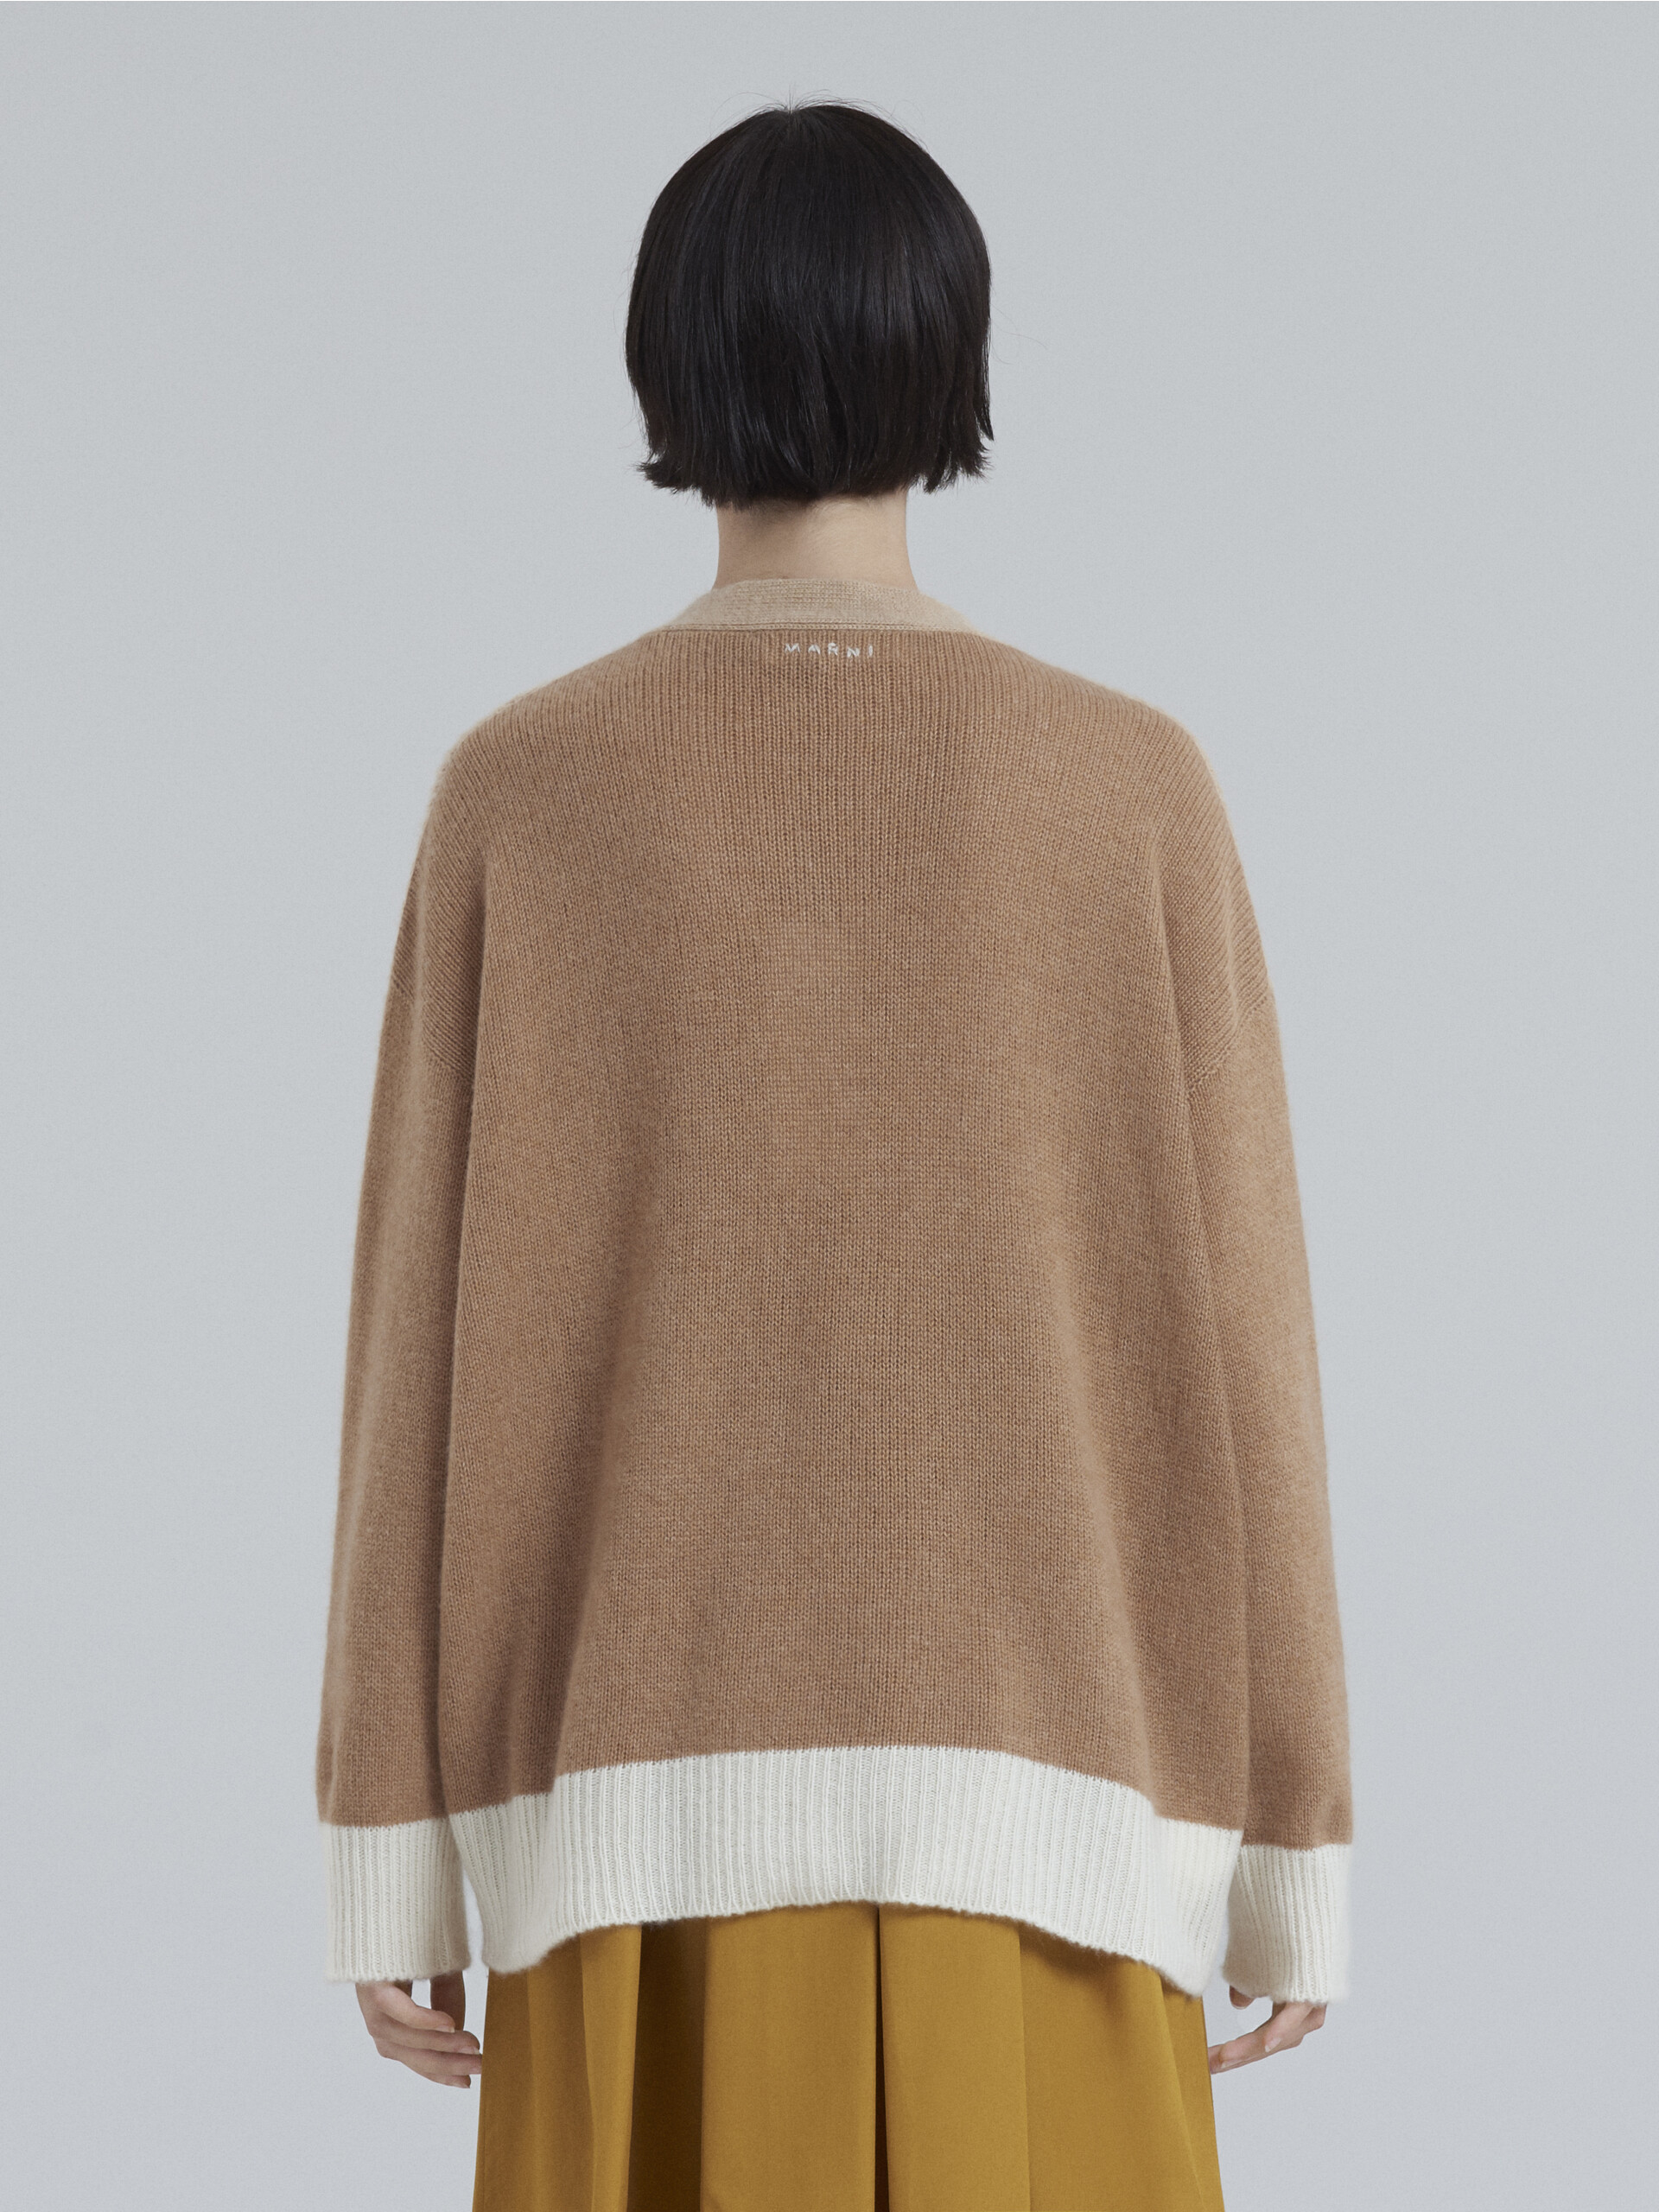 Brown cashmere V-neck cardigan - Pullovers - Image 3